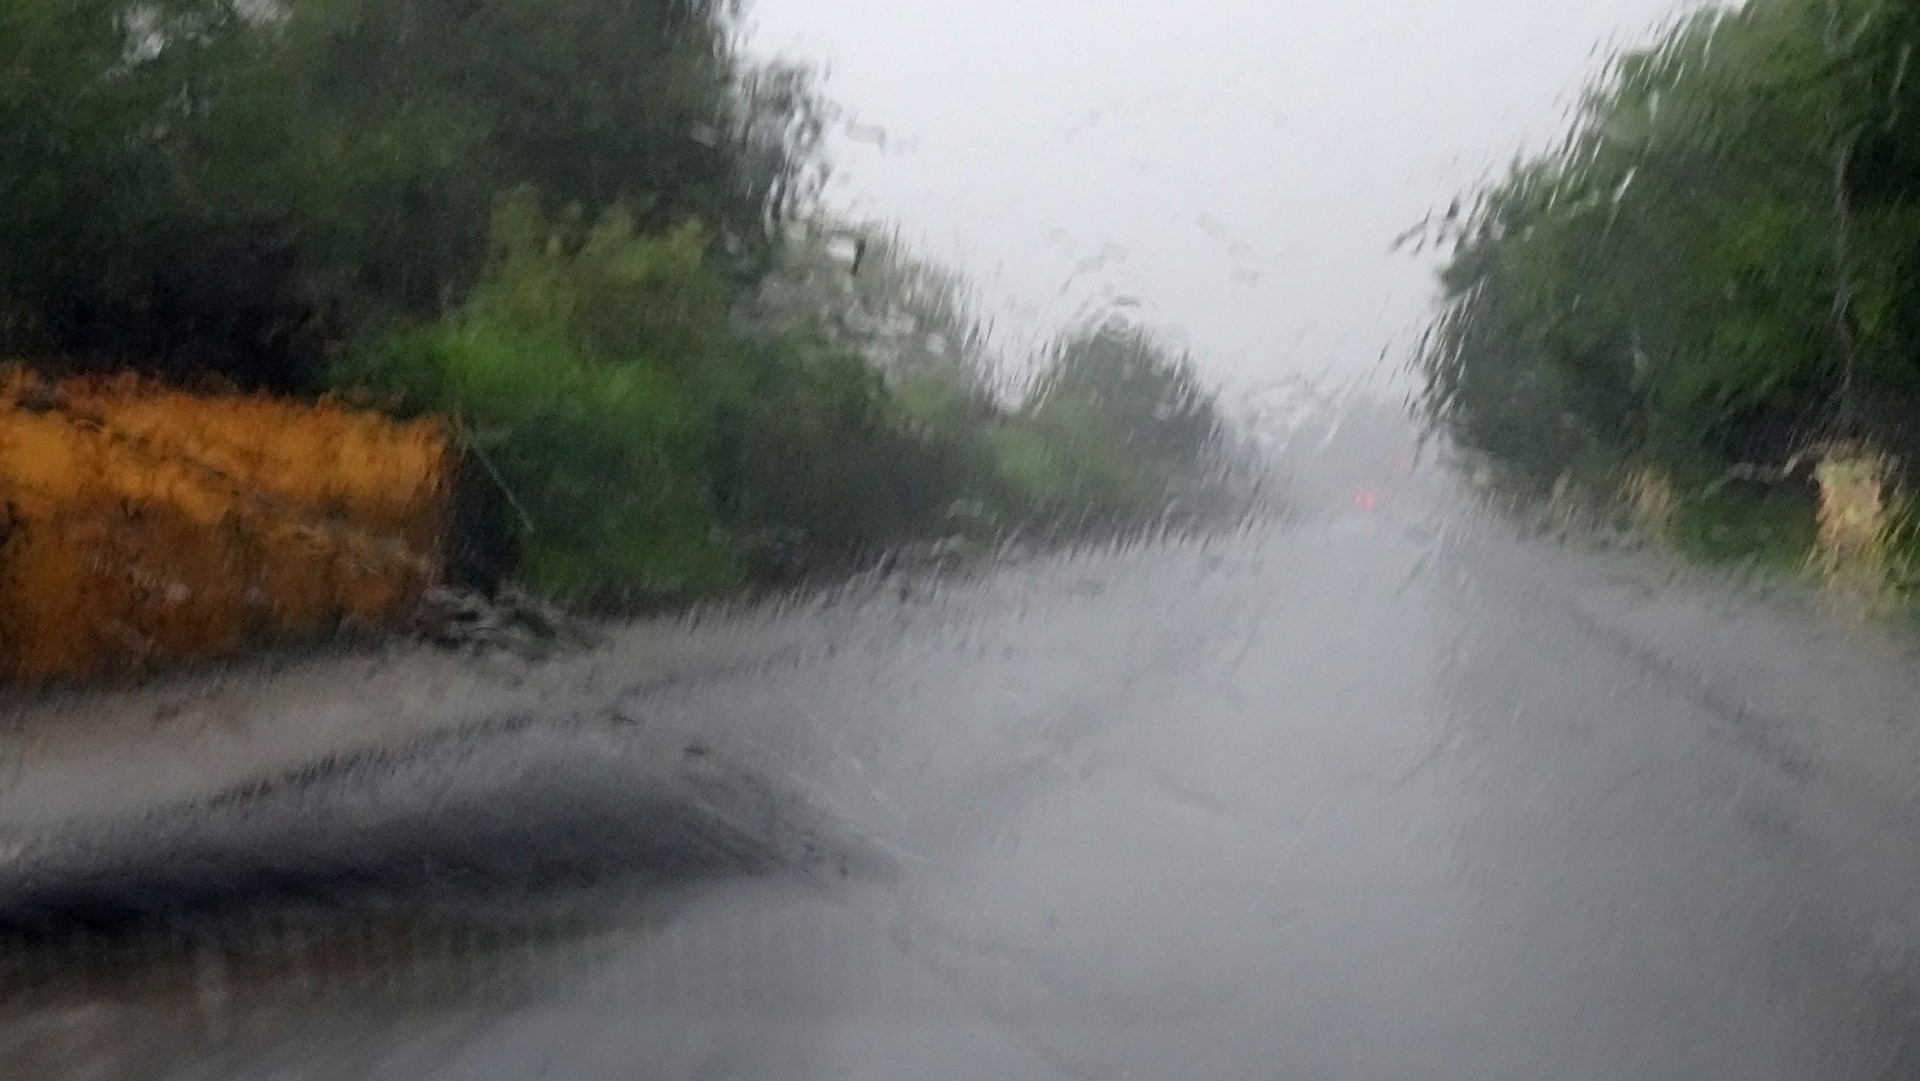 Rain-wetted windscreen - Drive carefully in heavy rain